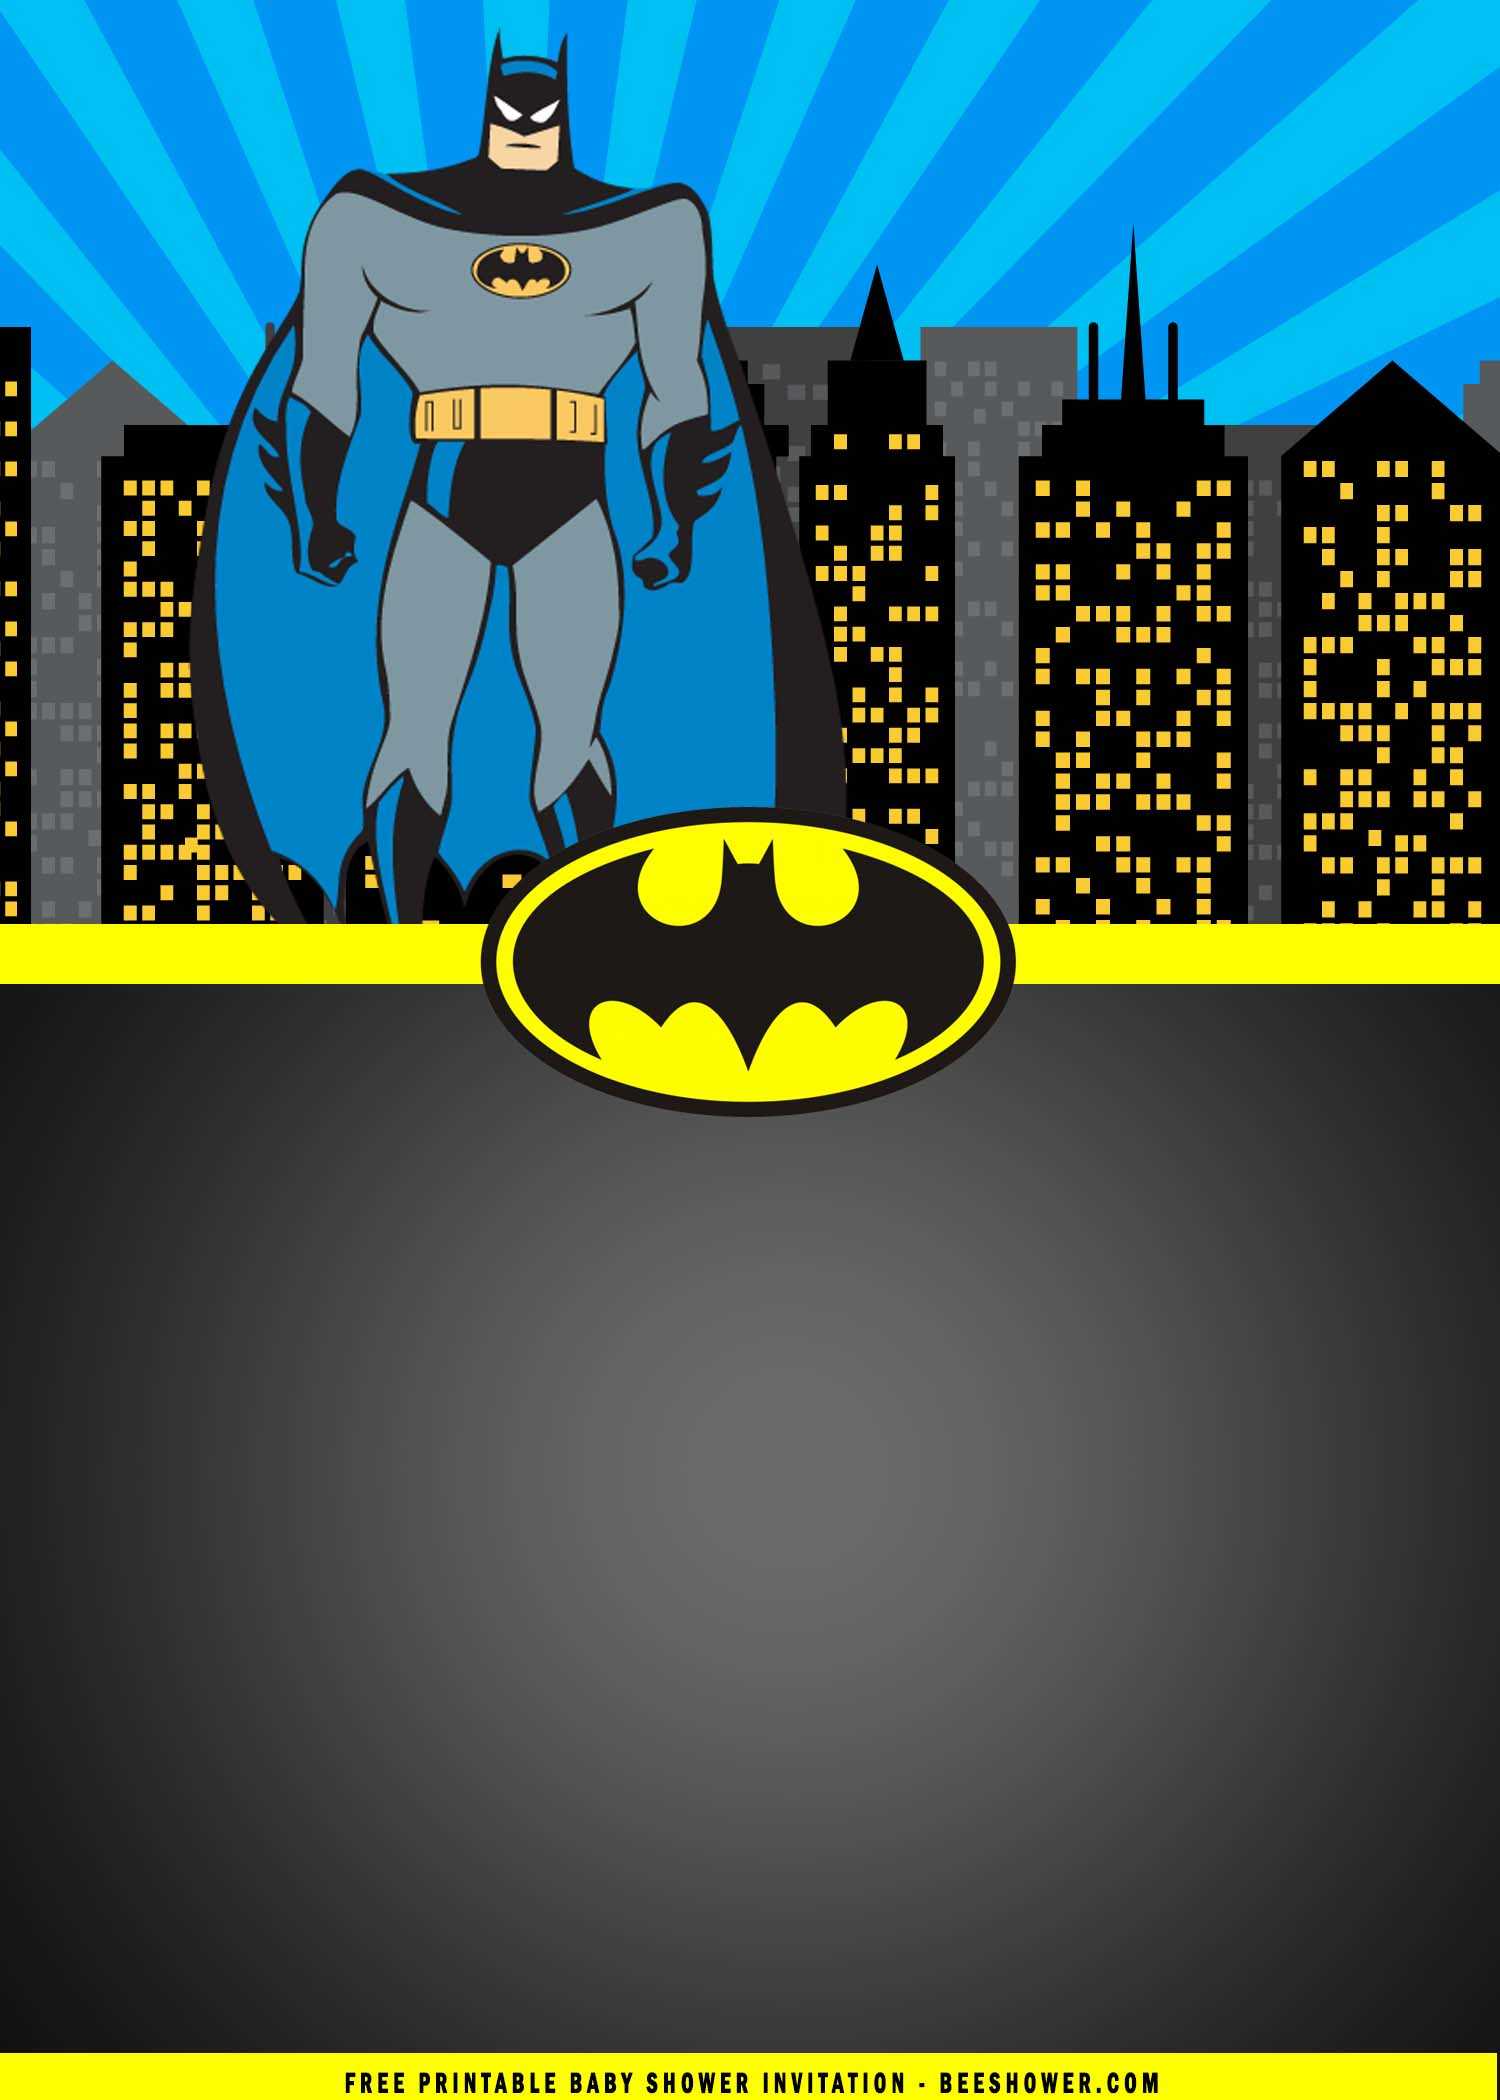 Free Printable) – Batman Birthday Party Invitation Templates With Batman Birthday Card Template